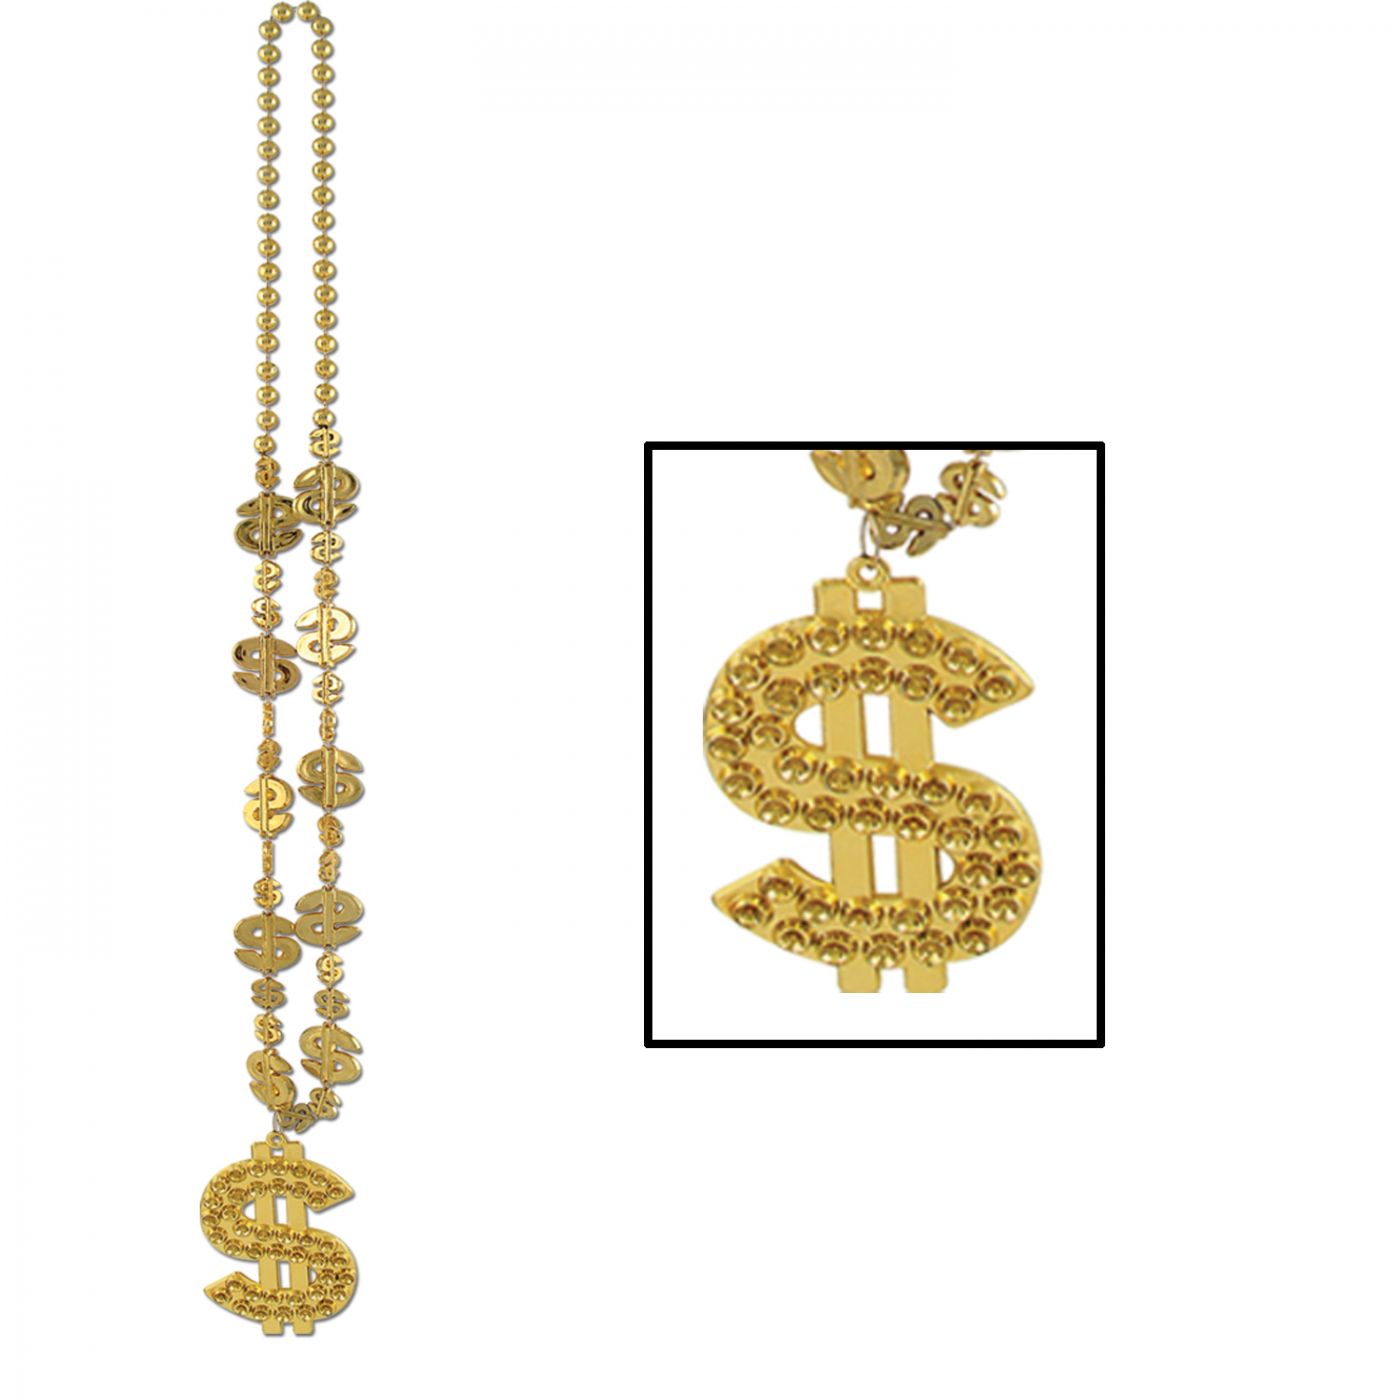 Image of  $  Beads w/ $  Medallion